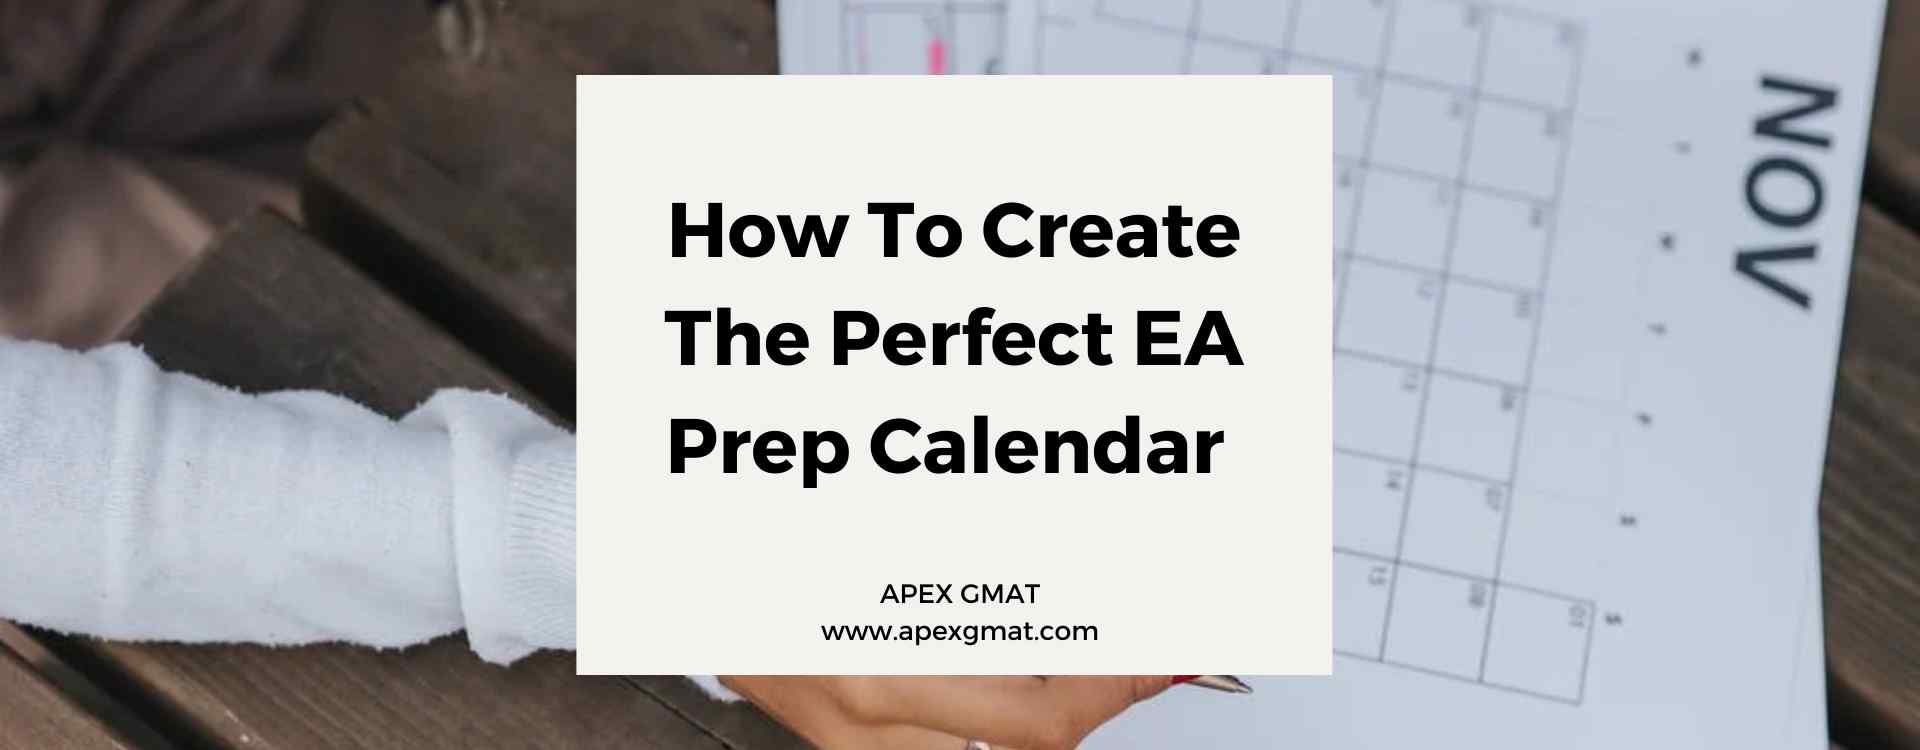 How To Create The Perfect EA Prep Calendar?